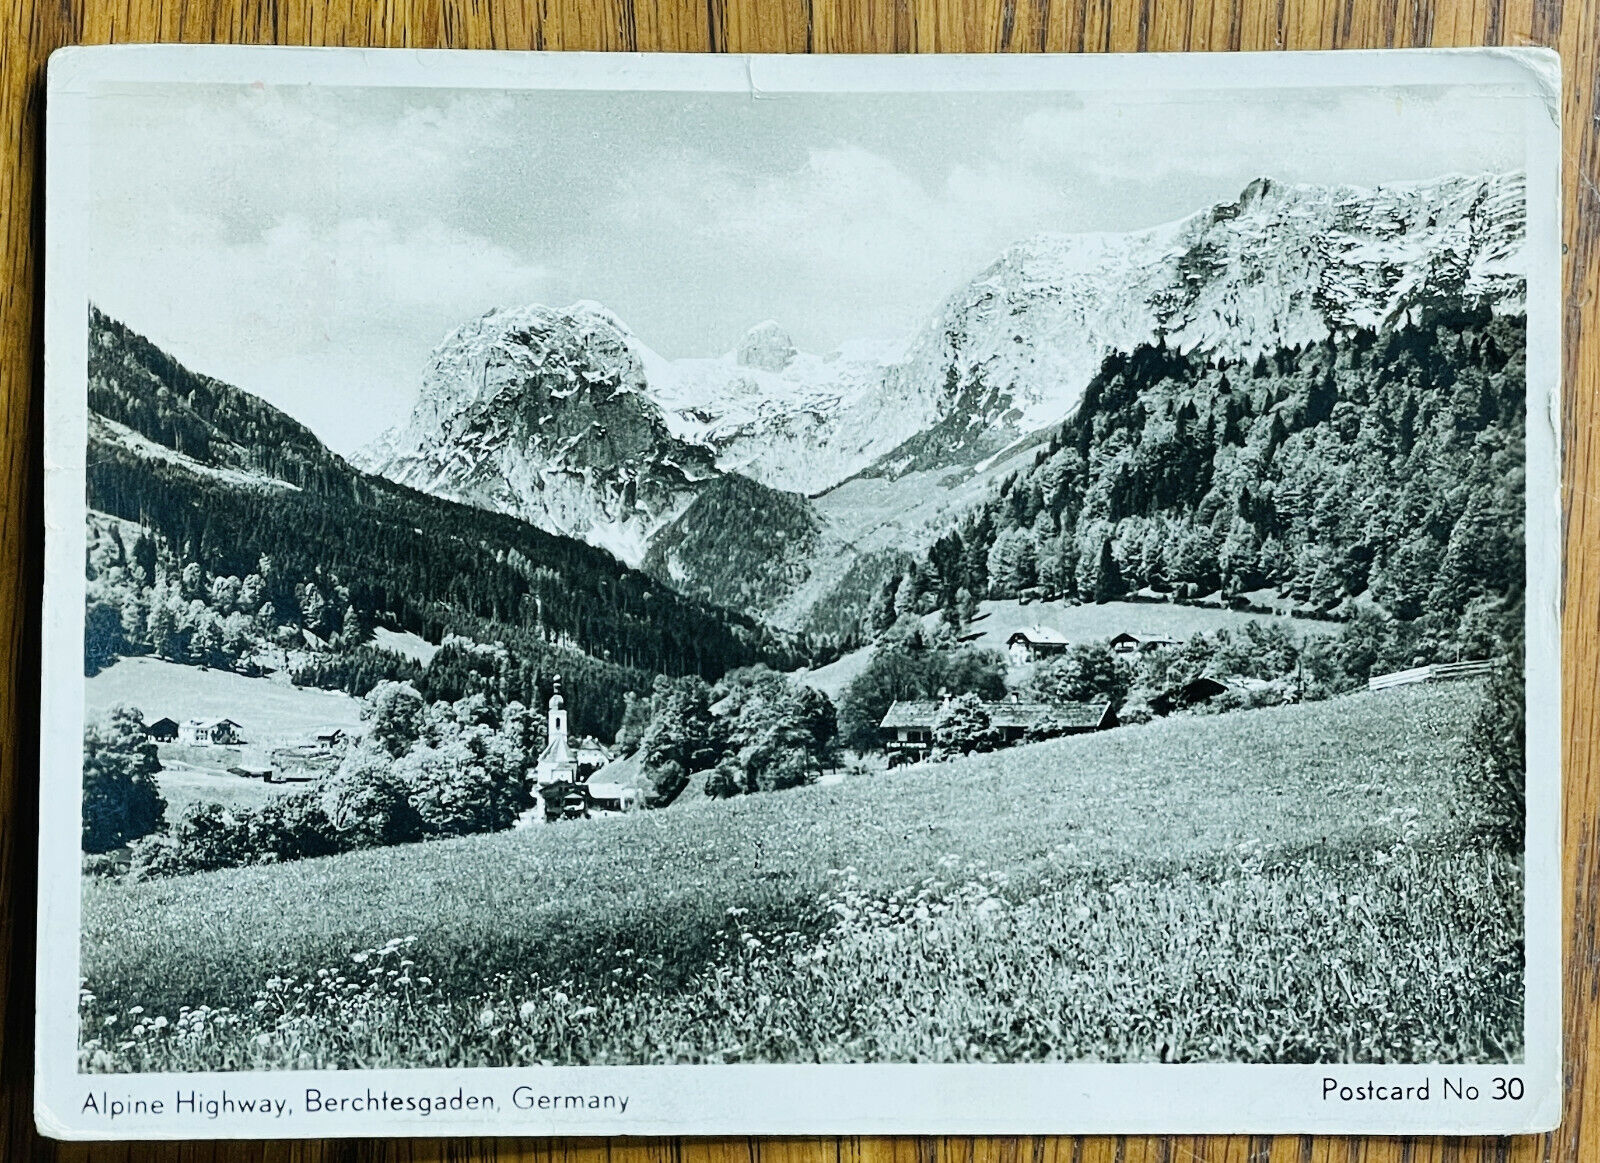  1955 POSTCARD BERCHTESGADEN GERMANY ALPINE HIGHWAY VINTAGE Bavarian Alps Europe